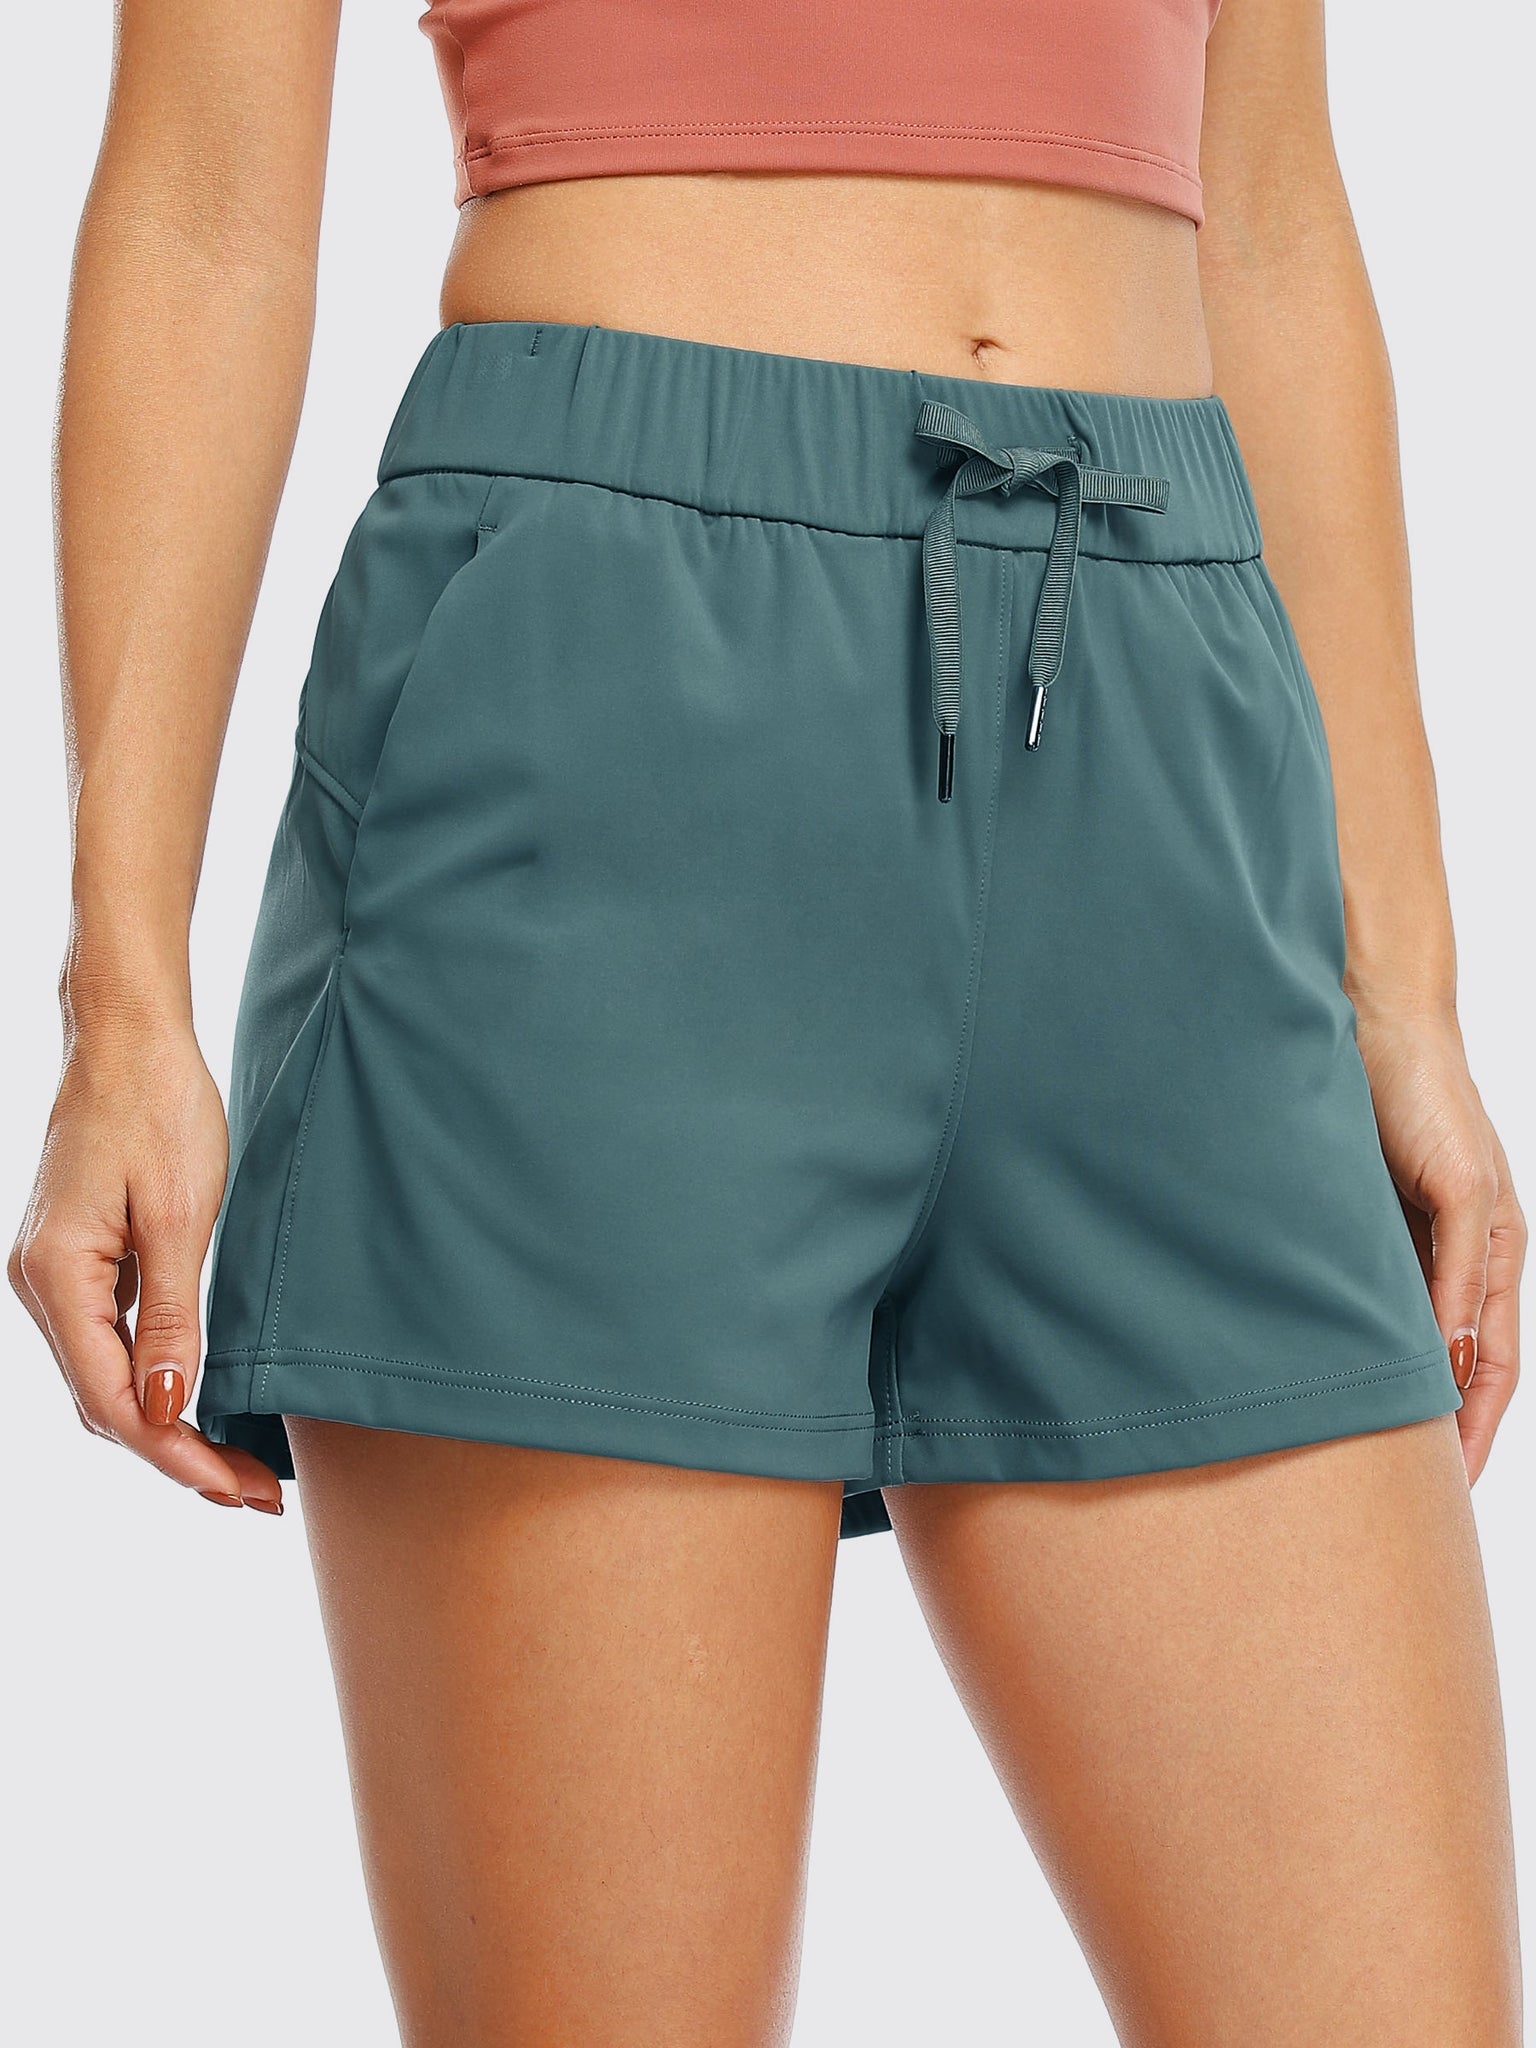 Willit Women's Summer 2.5 Inch Shorts_Mallard Green3